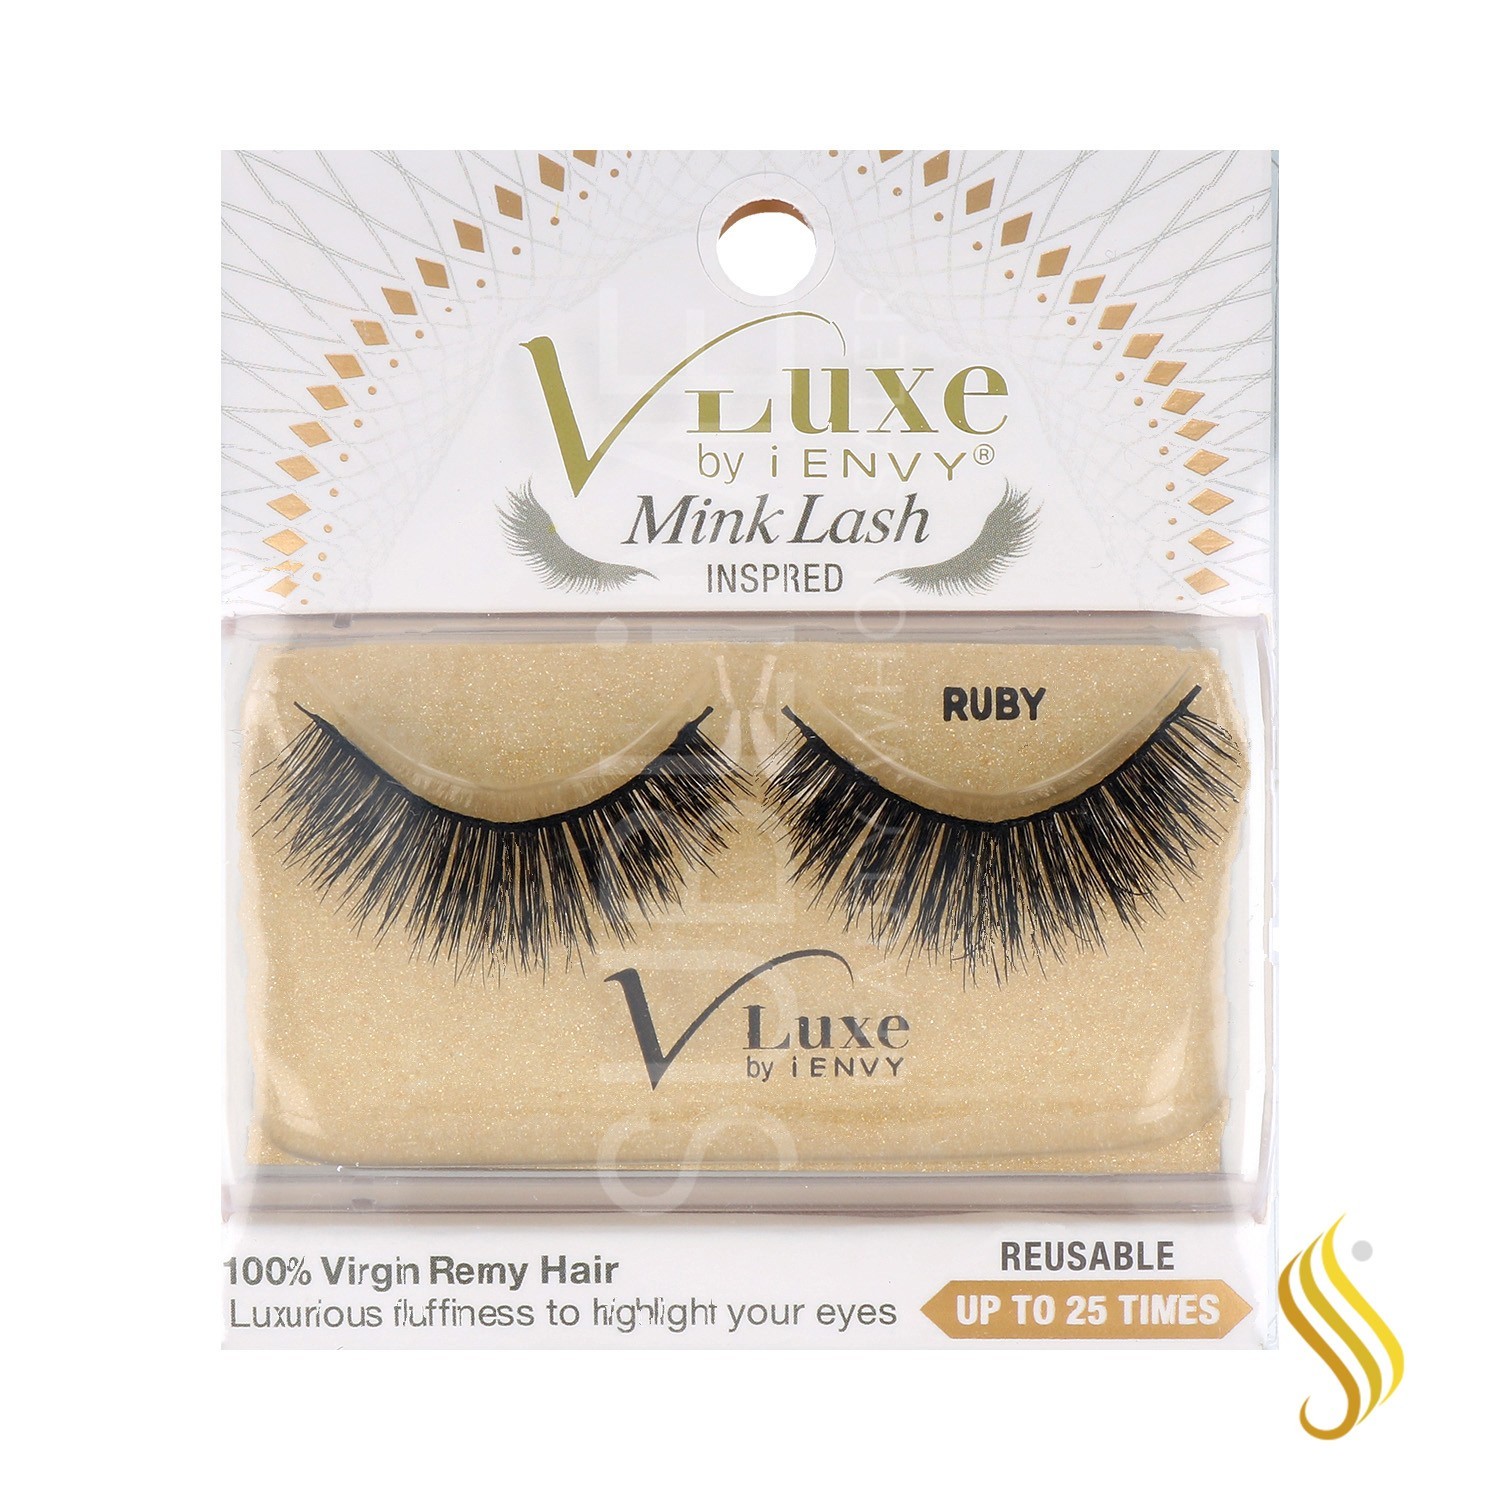 I Envy V Luxe Remy Hair Minklash/Pestaña Inspired Ruby (Vlef05)